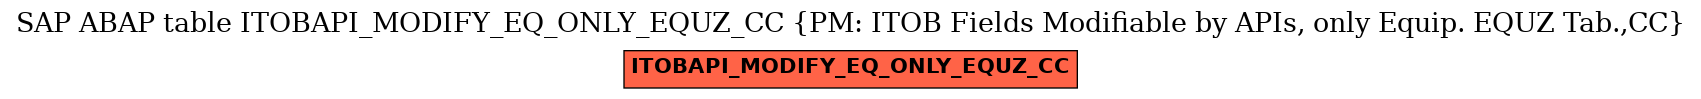 E-R Diagram for table ITOBAPI_MODIFY_EQ_ONLY_EQUZ_CC (PM: ITOB Fields Modifiable by APIs, only Equip. EQUZ Tab.,CC)